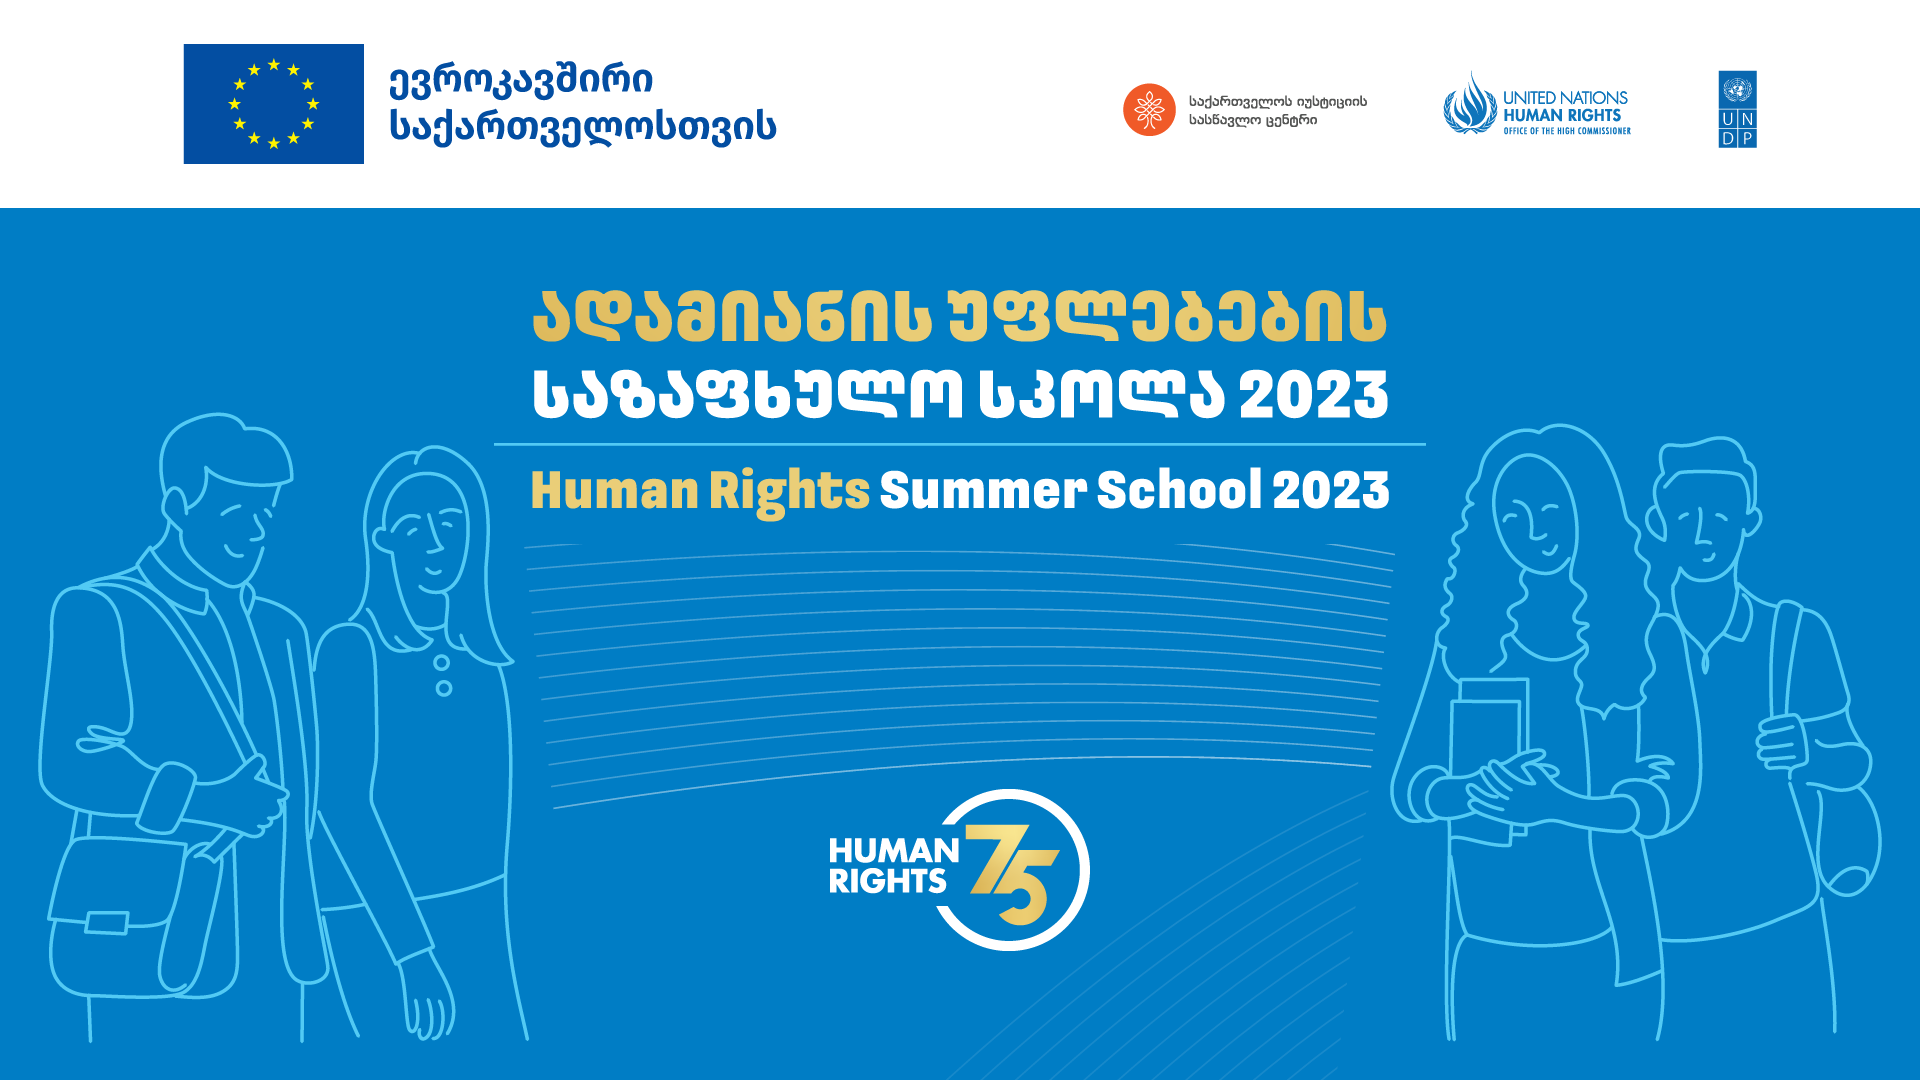 Human Rights Summer School 2023